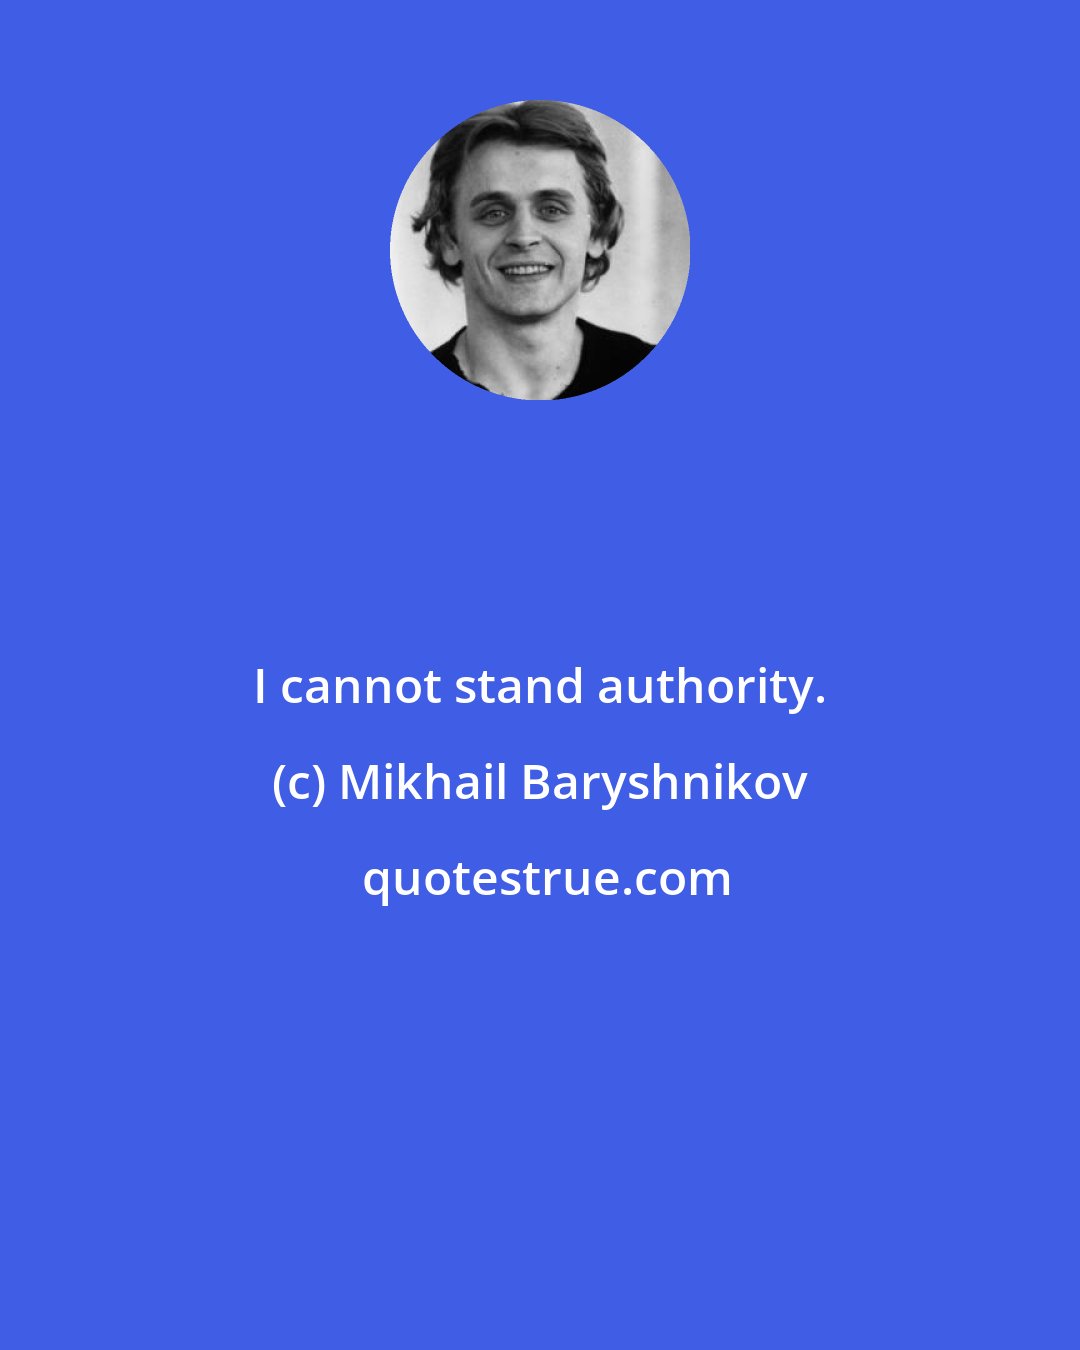 Mikhail Baryshnikov: I cannot stand authority.